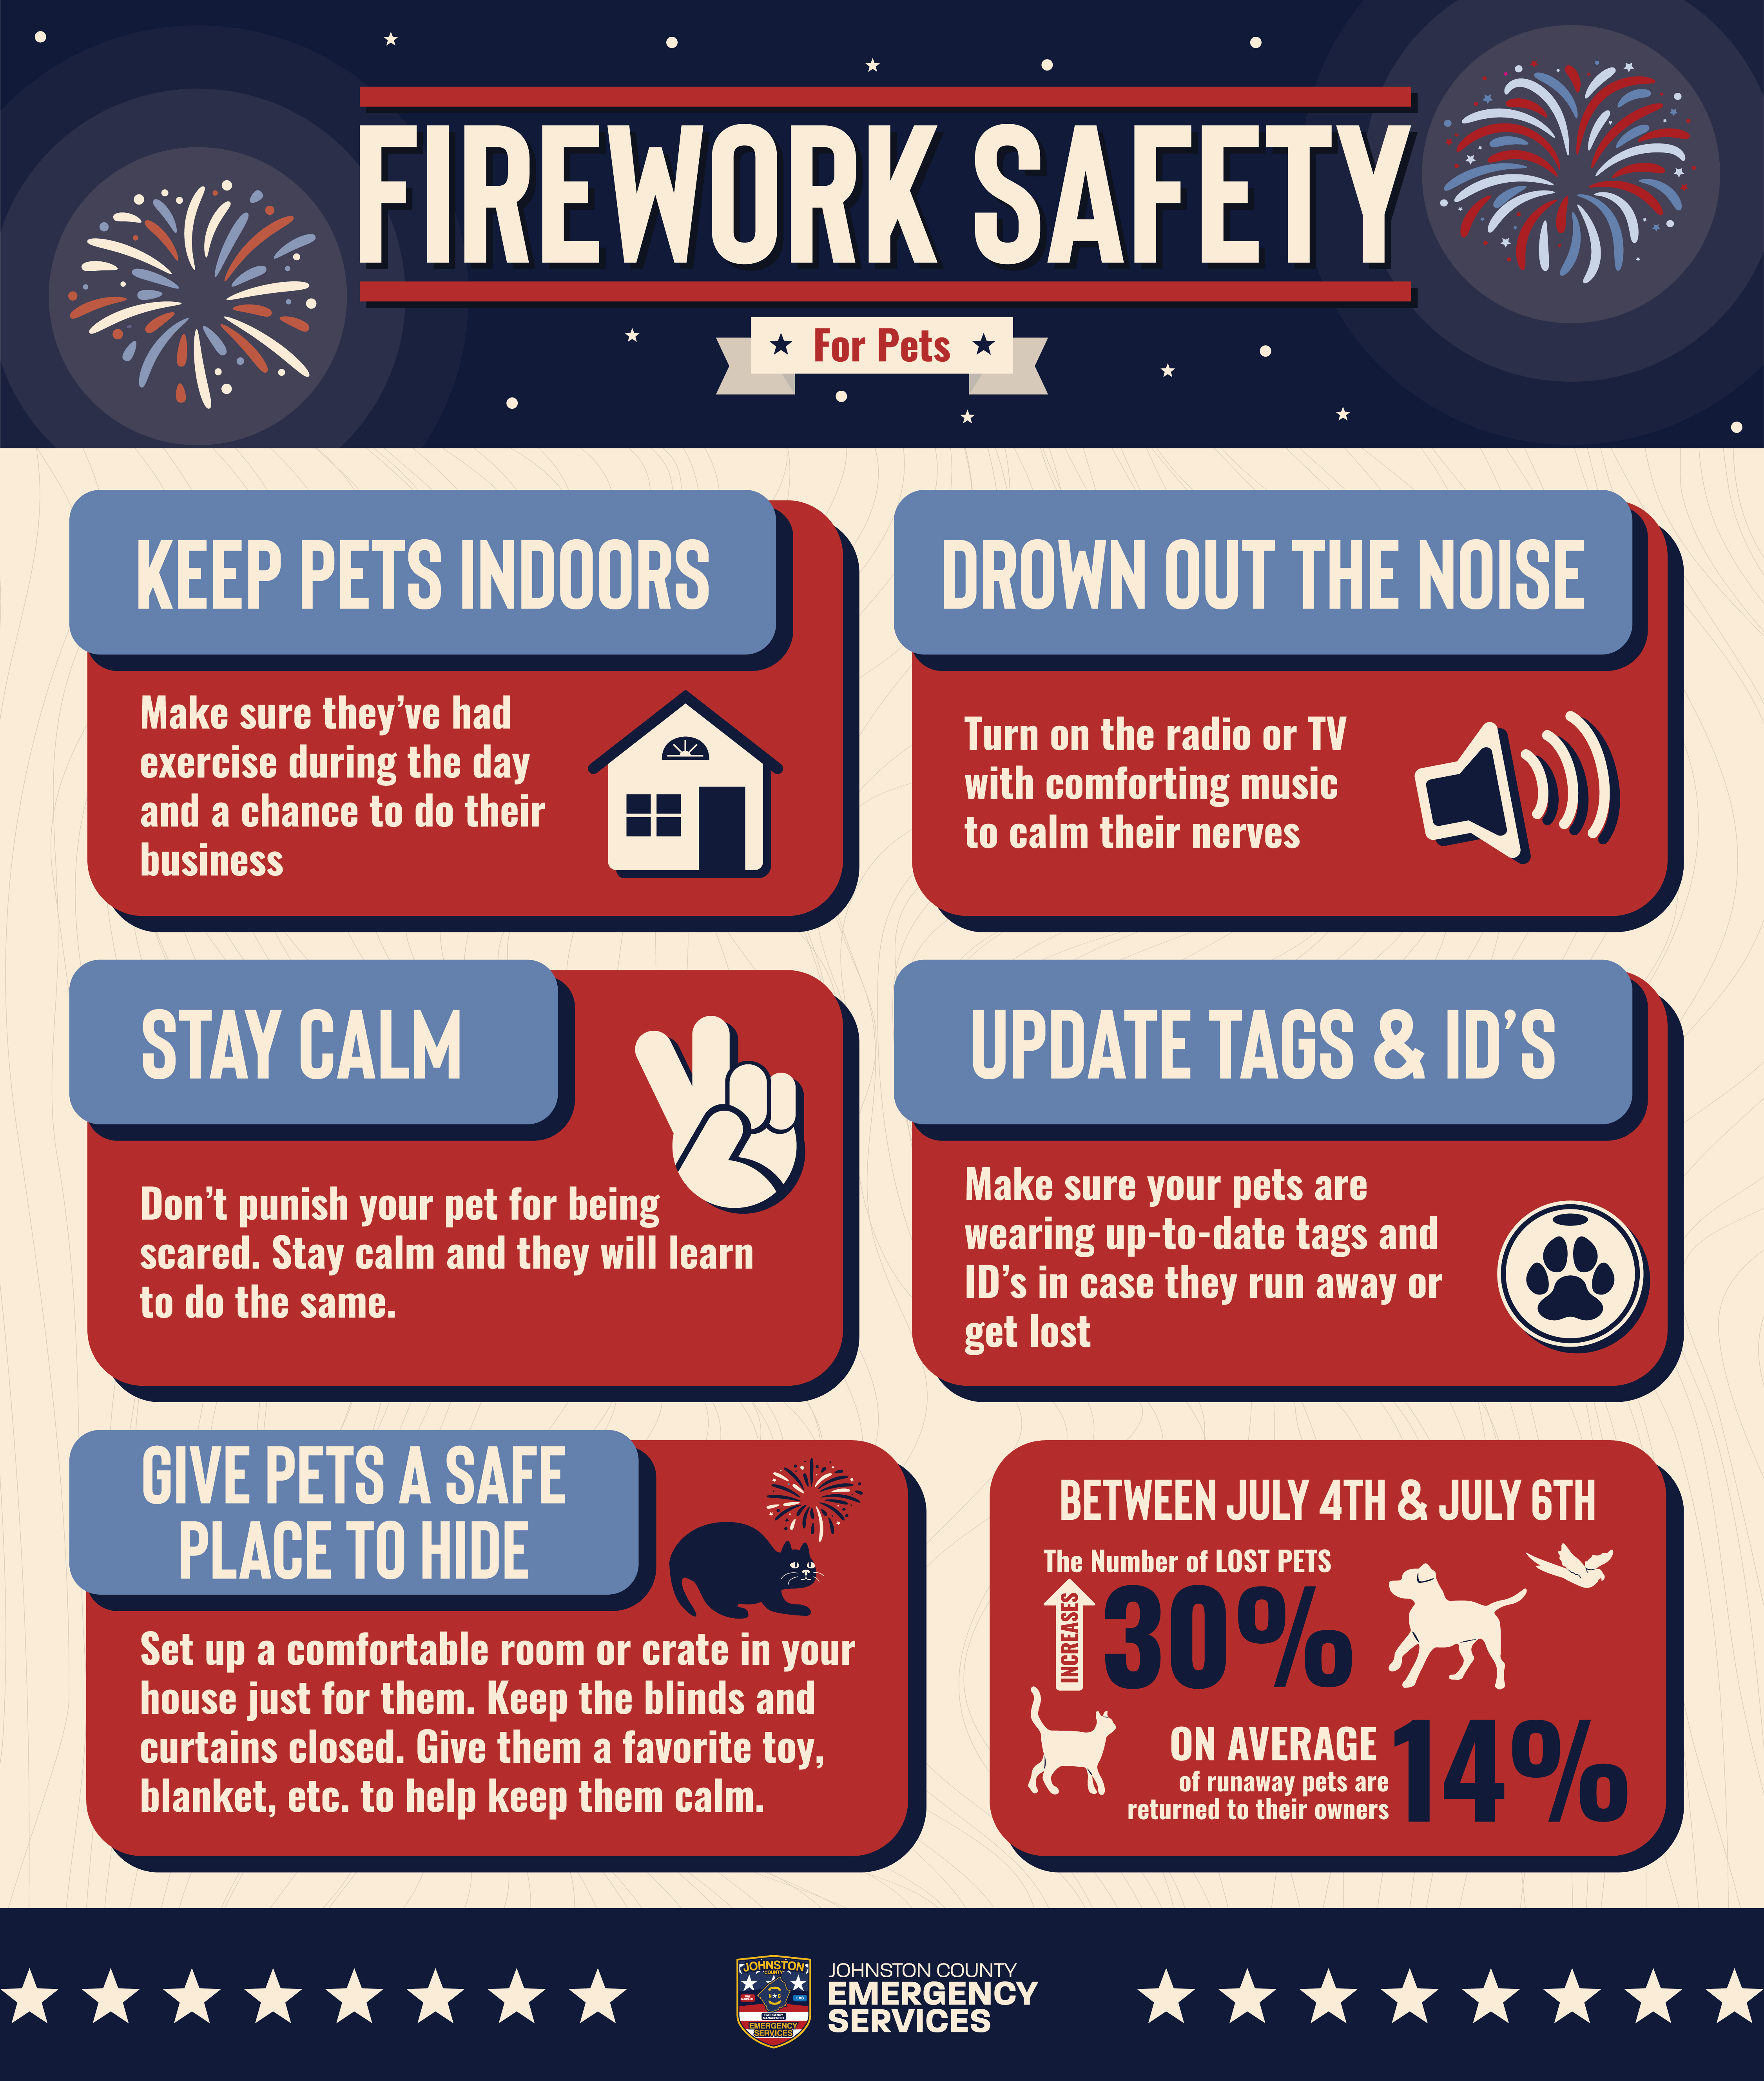 Firework safety for pets brochure